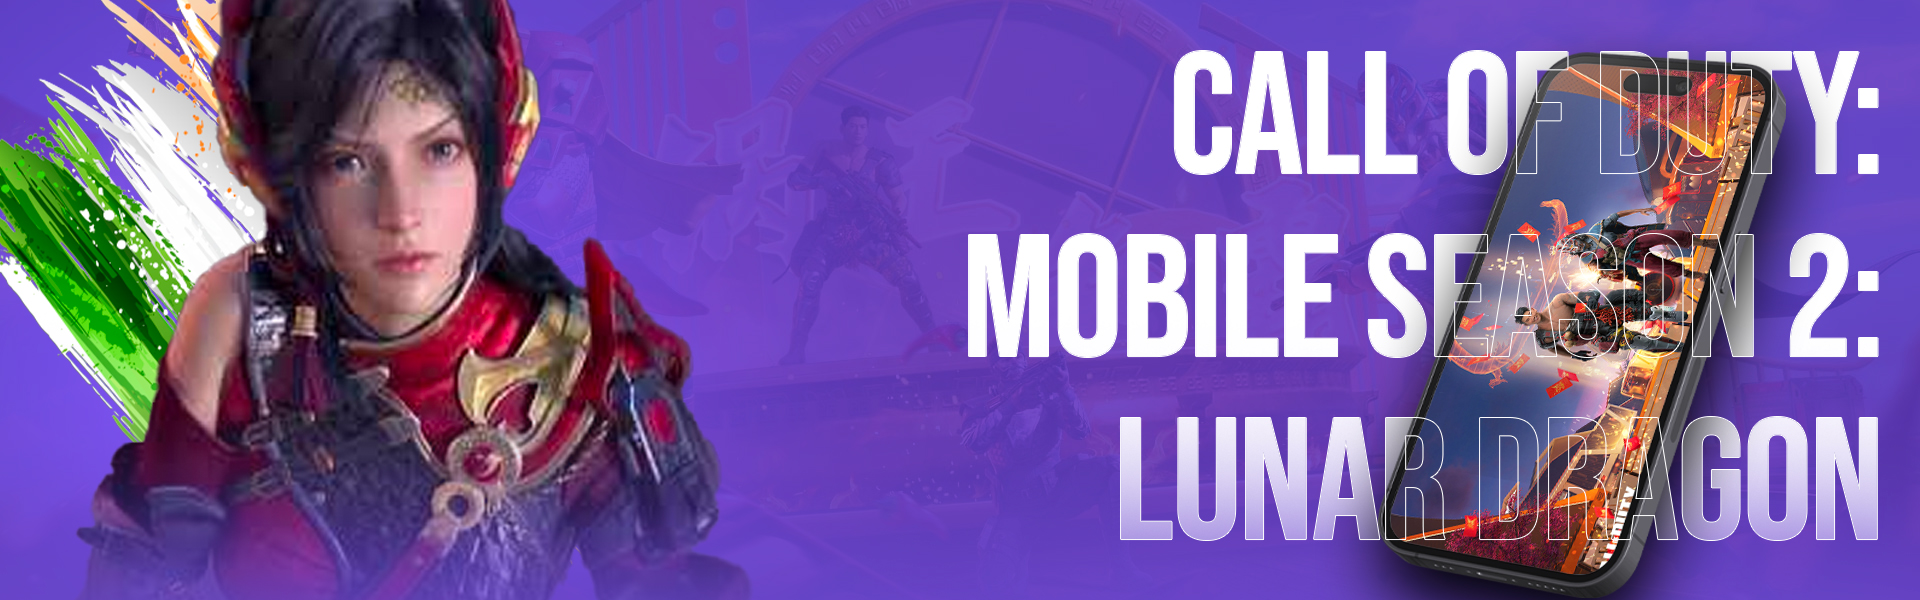 Call of Duty: Mobile Season 2: Lunar Dragon
